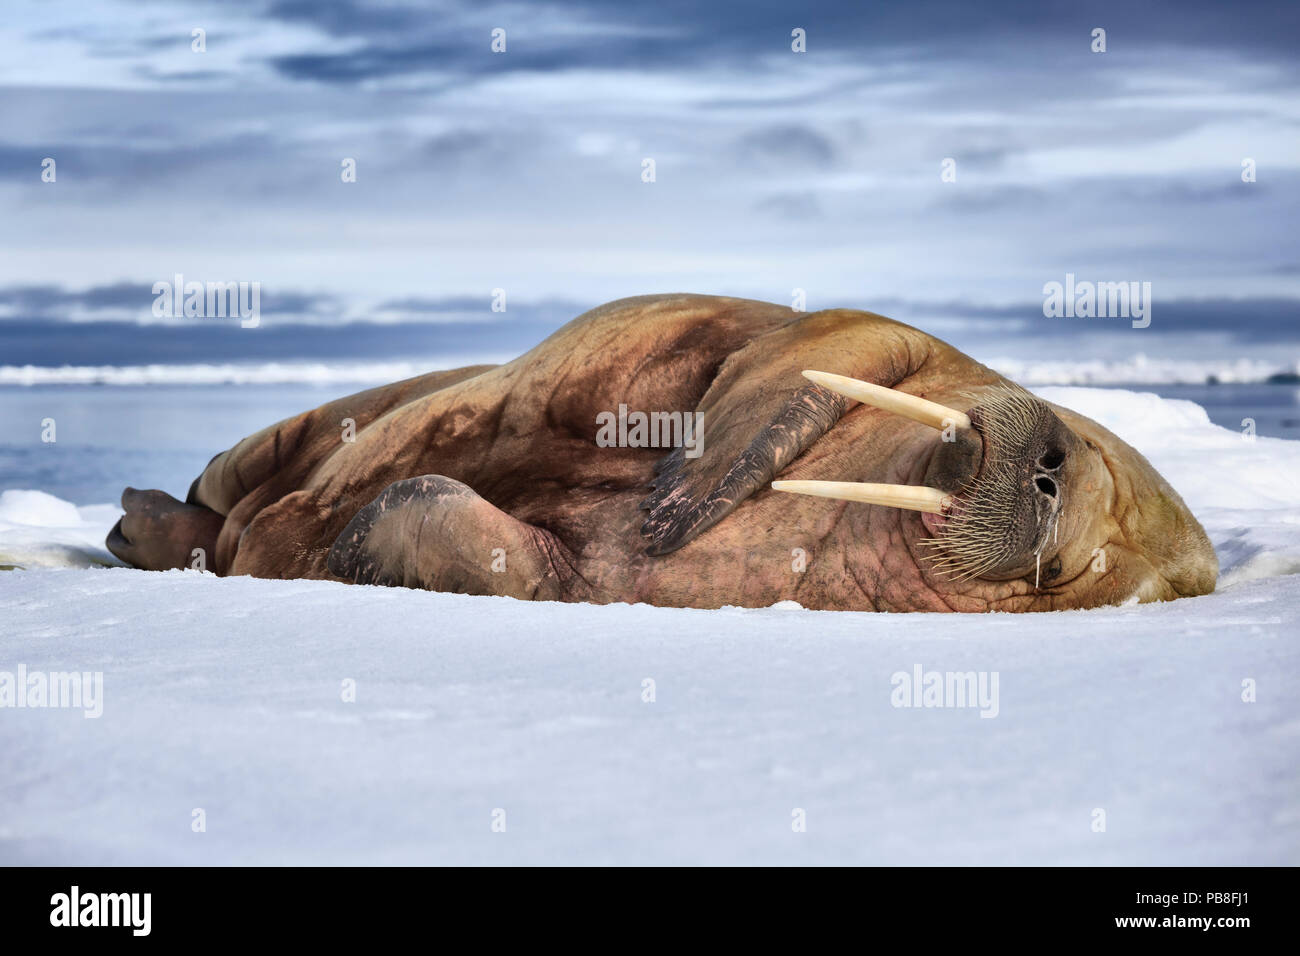 Atlantic walrus (Odobenus rosmarus) with a runny nose, sound asleep on ice floe, Svalbard, Norway, June Stock Photo